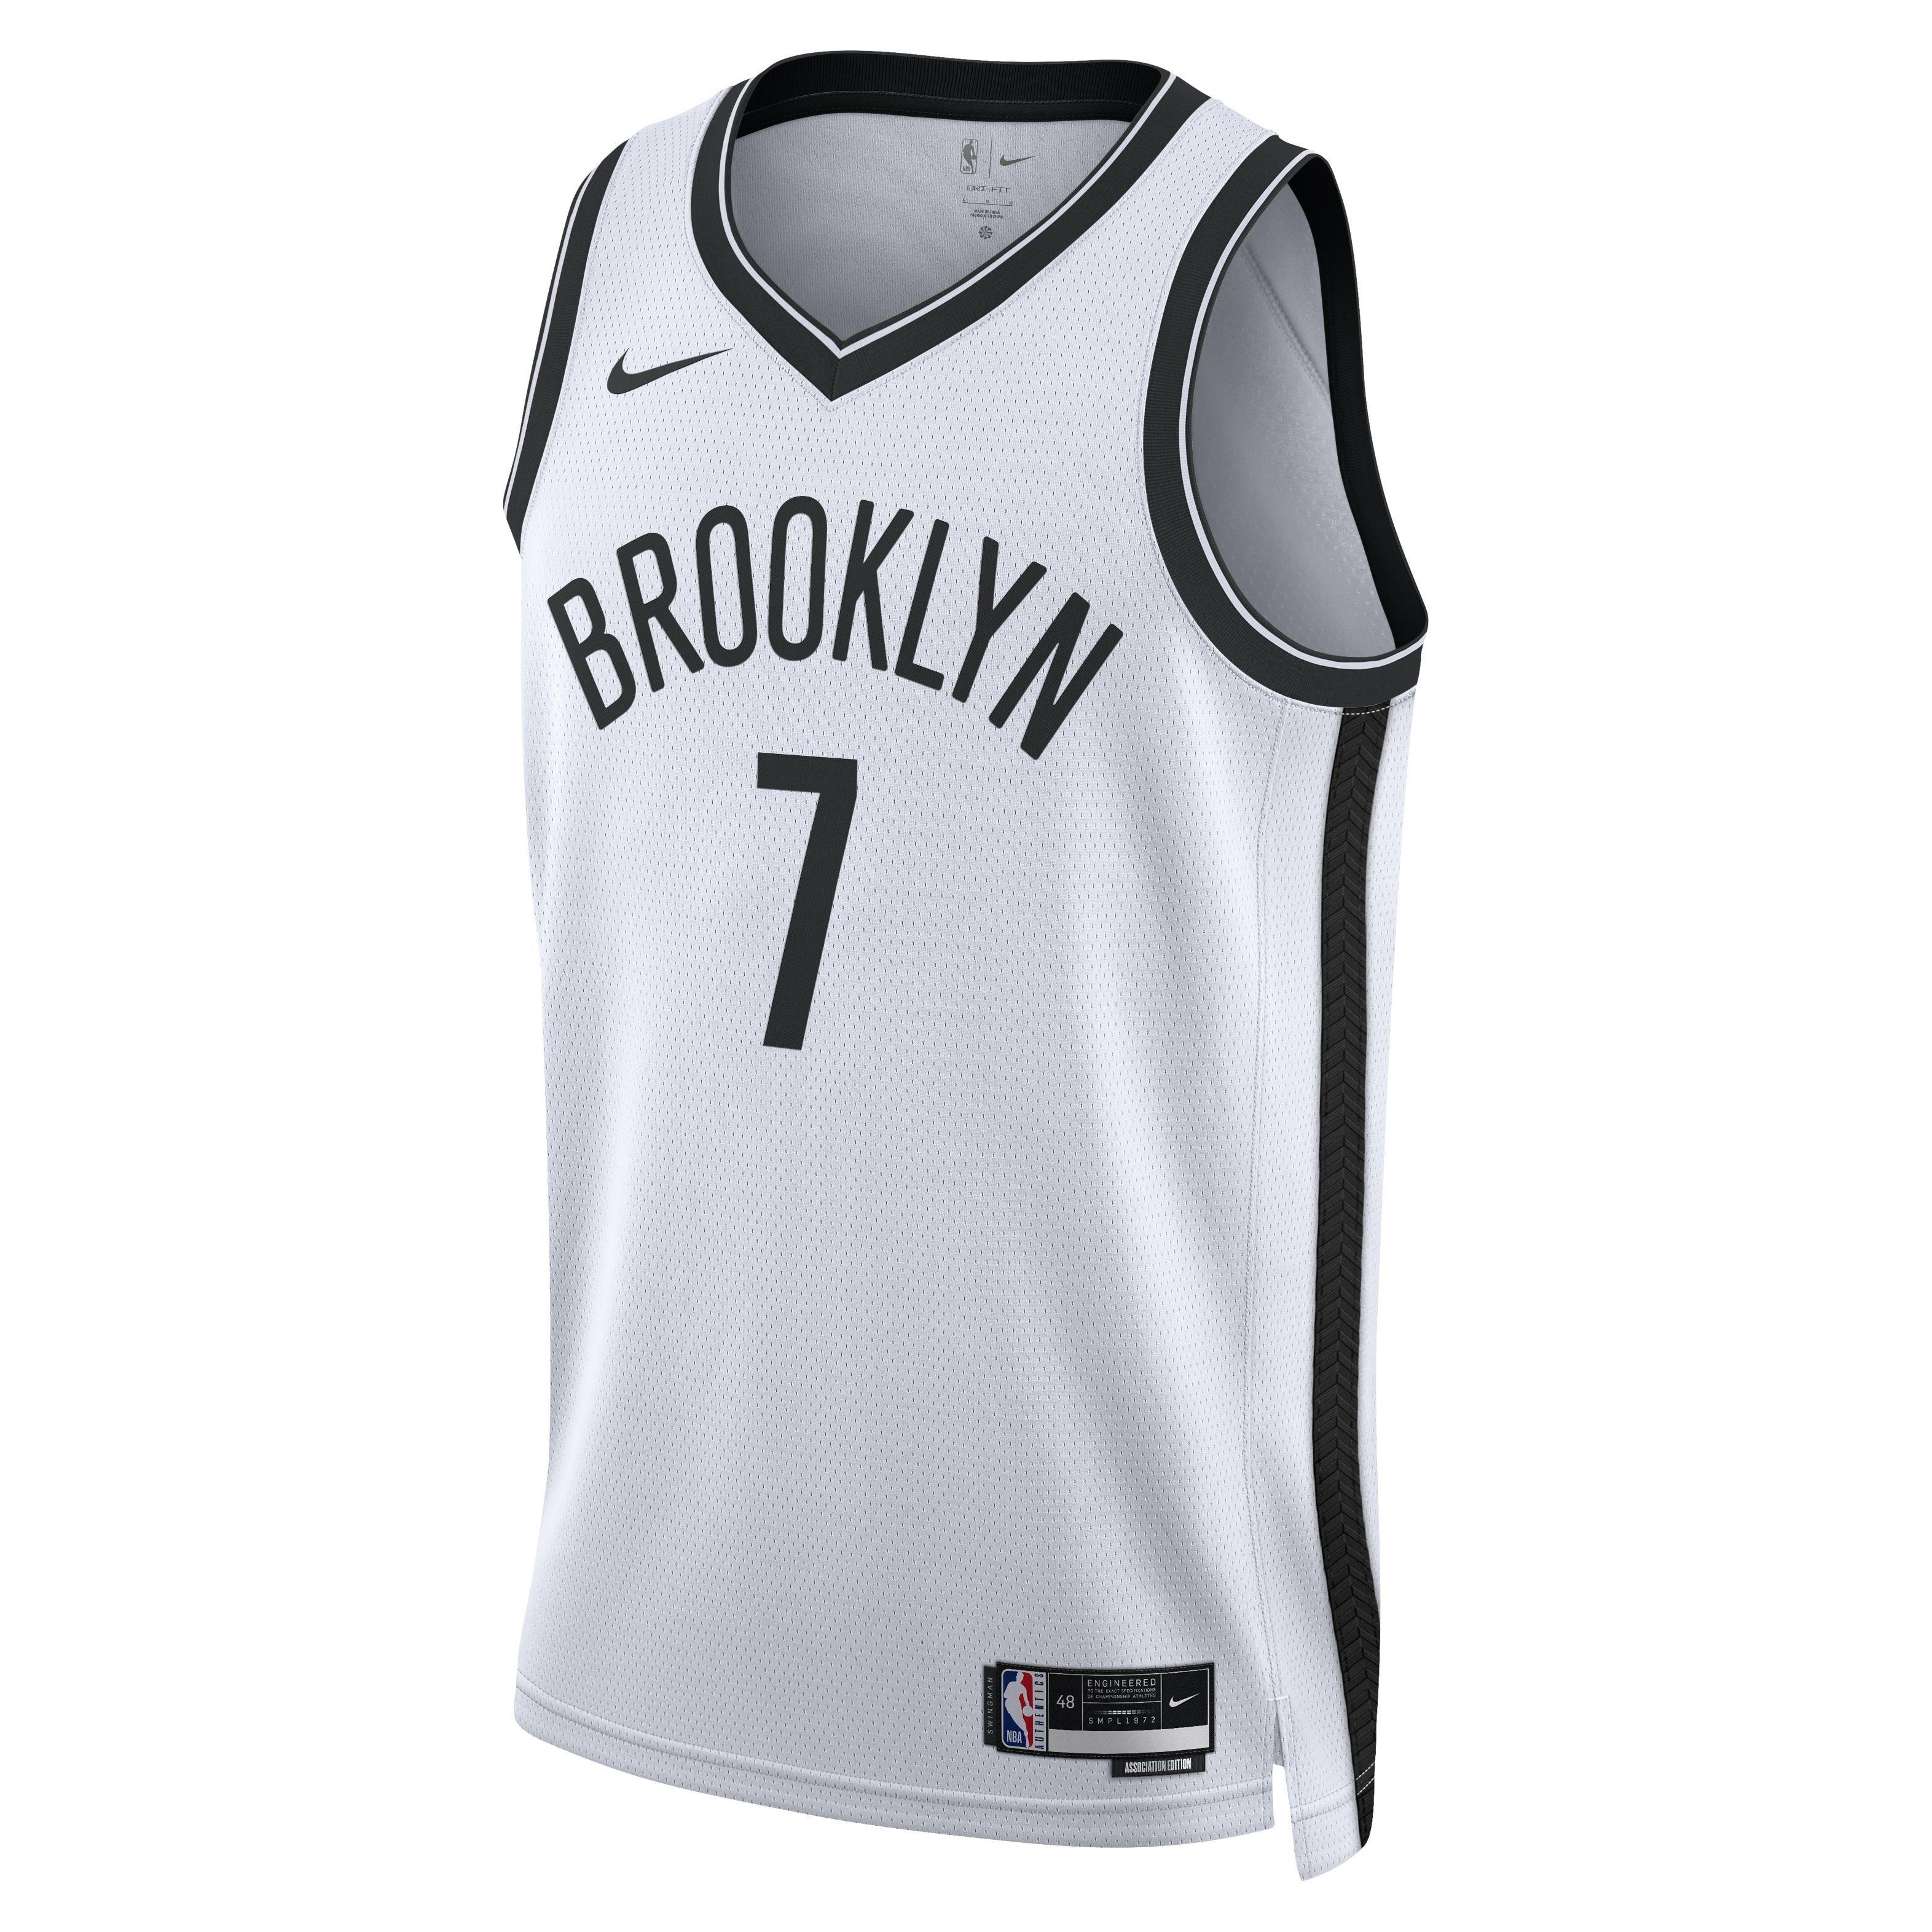 Nike Dry NBA Authentics Team USA Basketball Jersey Blank Youth Large -  Brand New